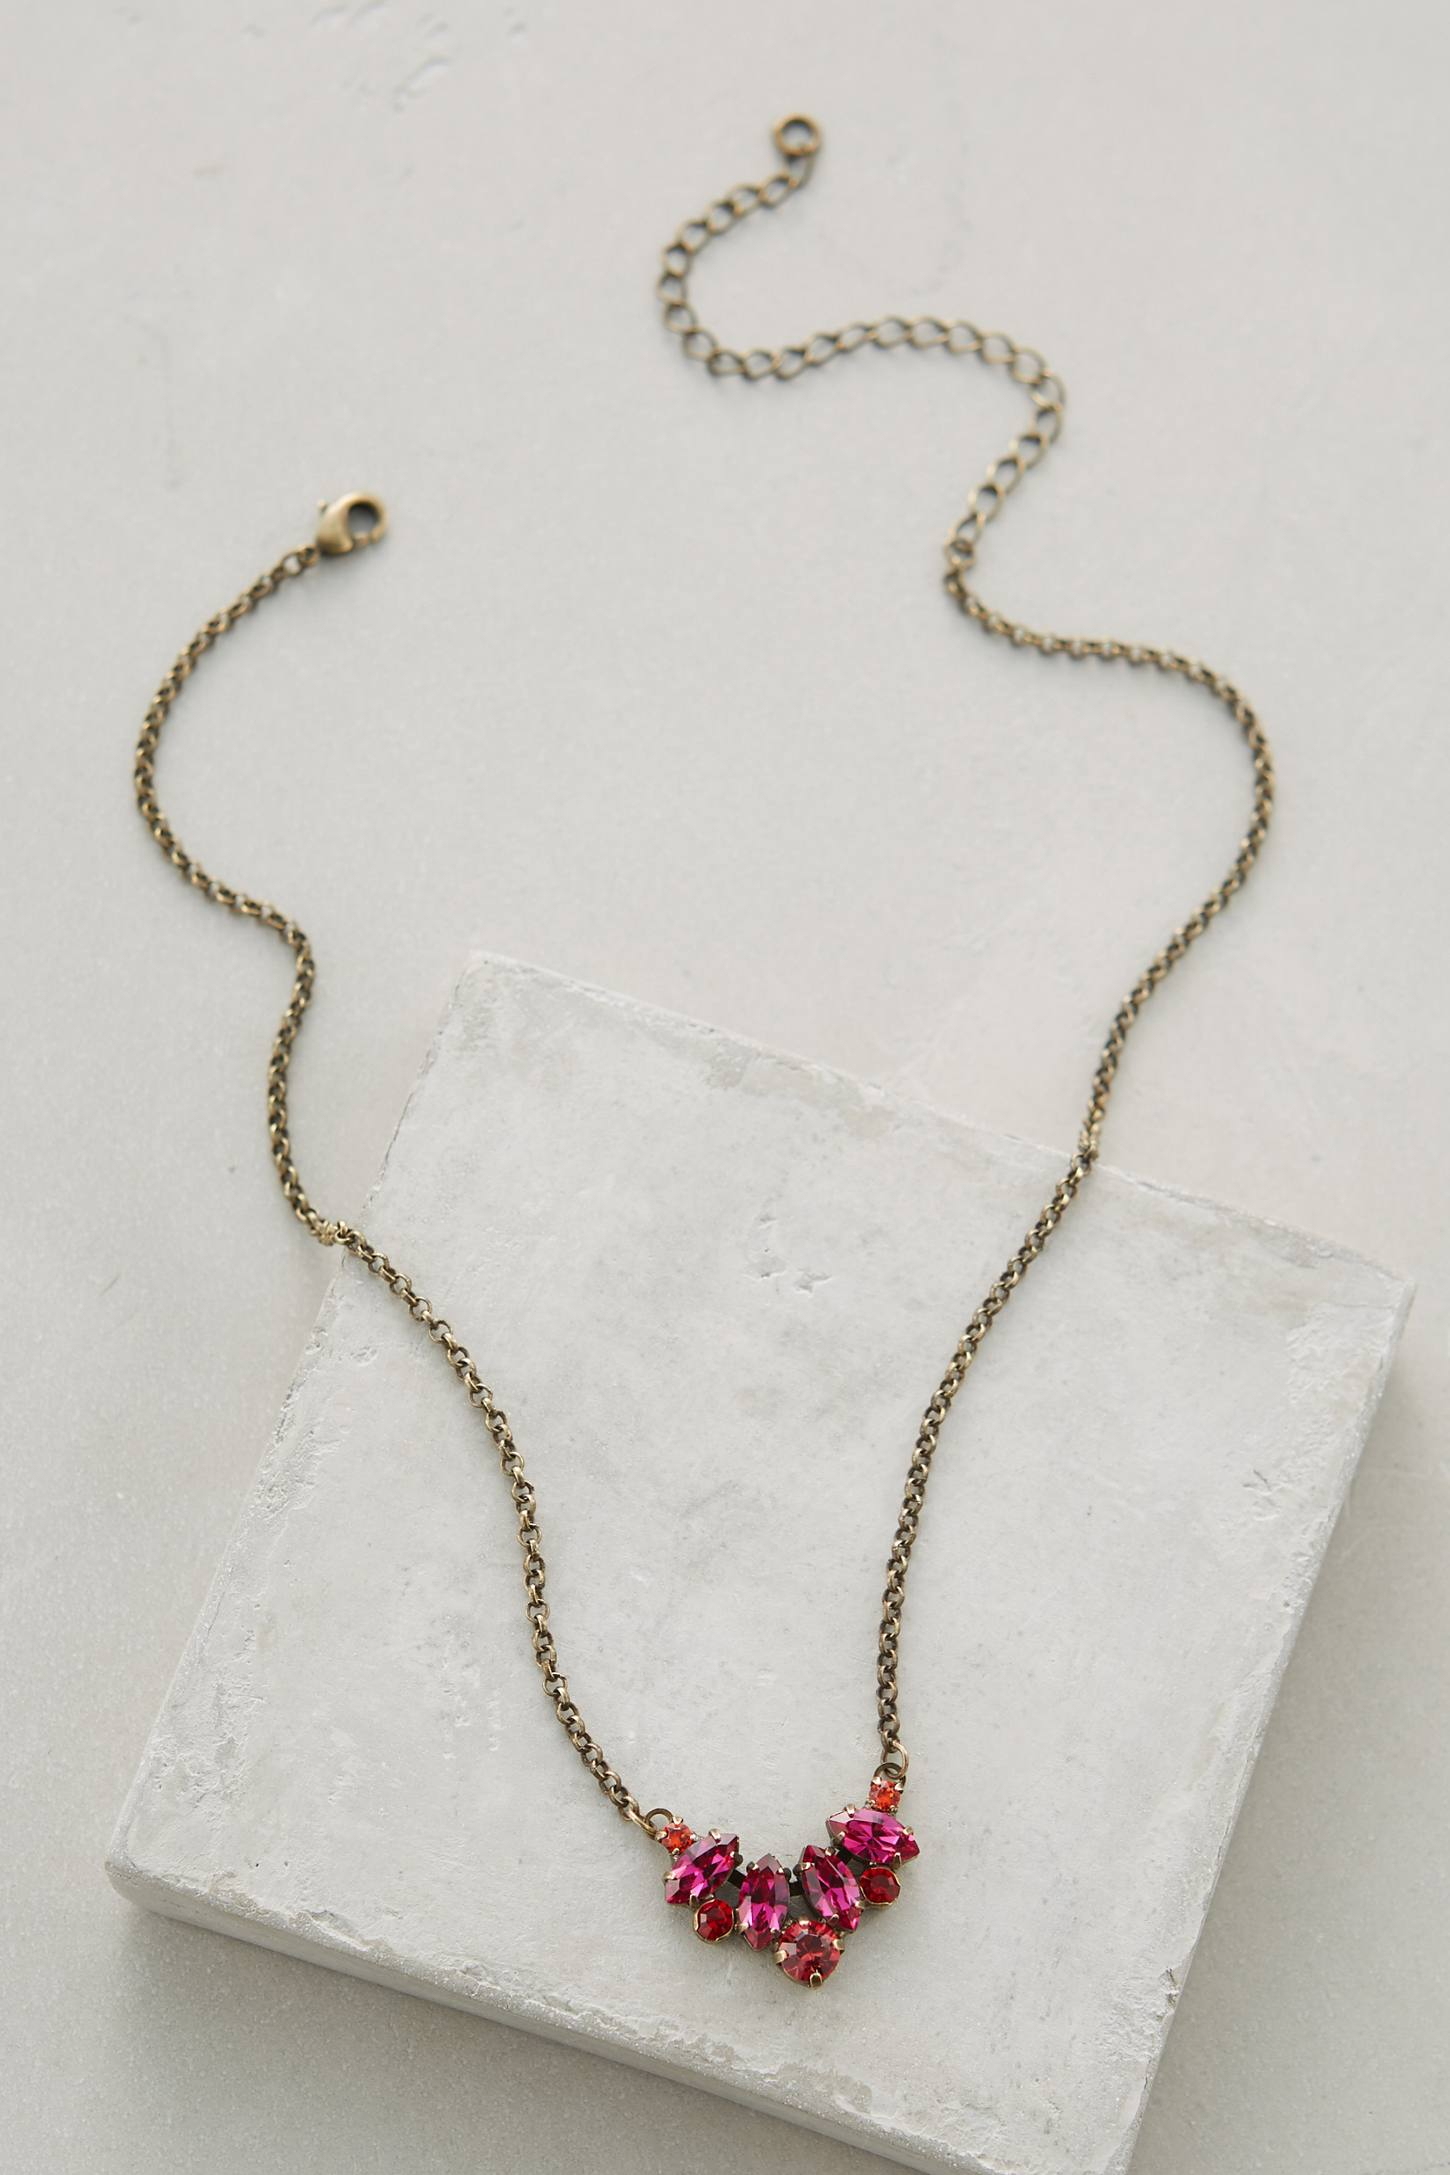 Lyst - Sorrelli Navette Collar Necklace, 17.5" in Metallic